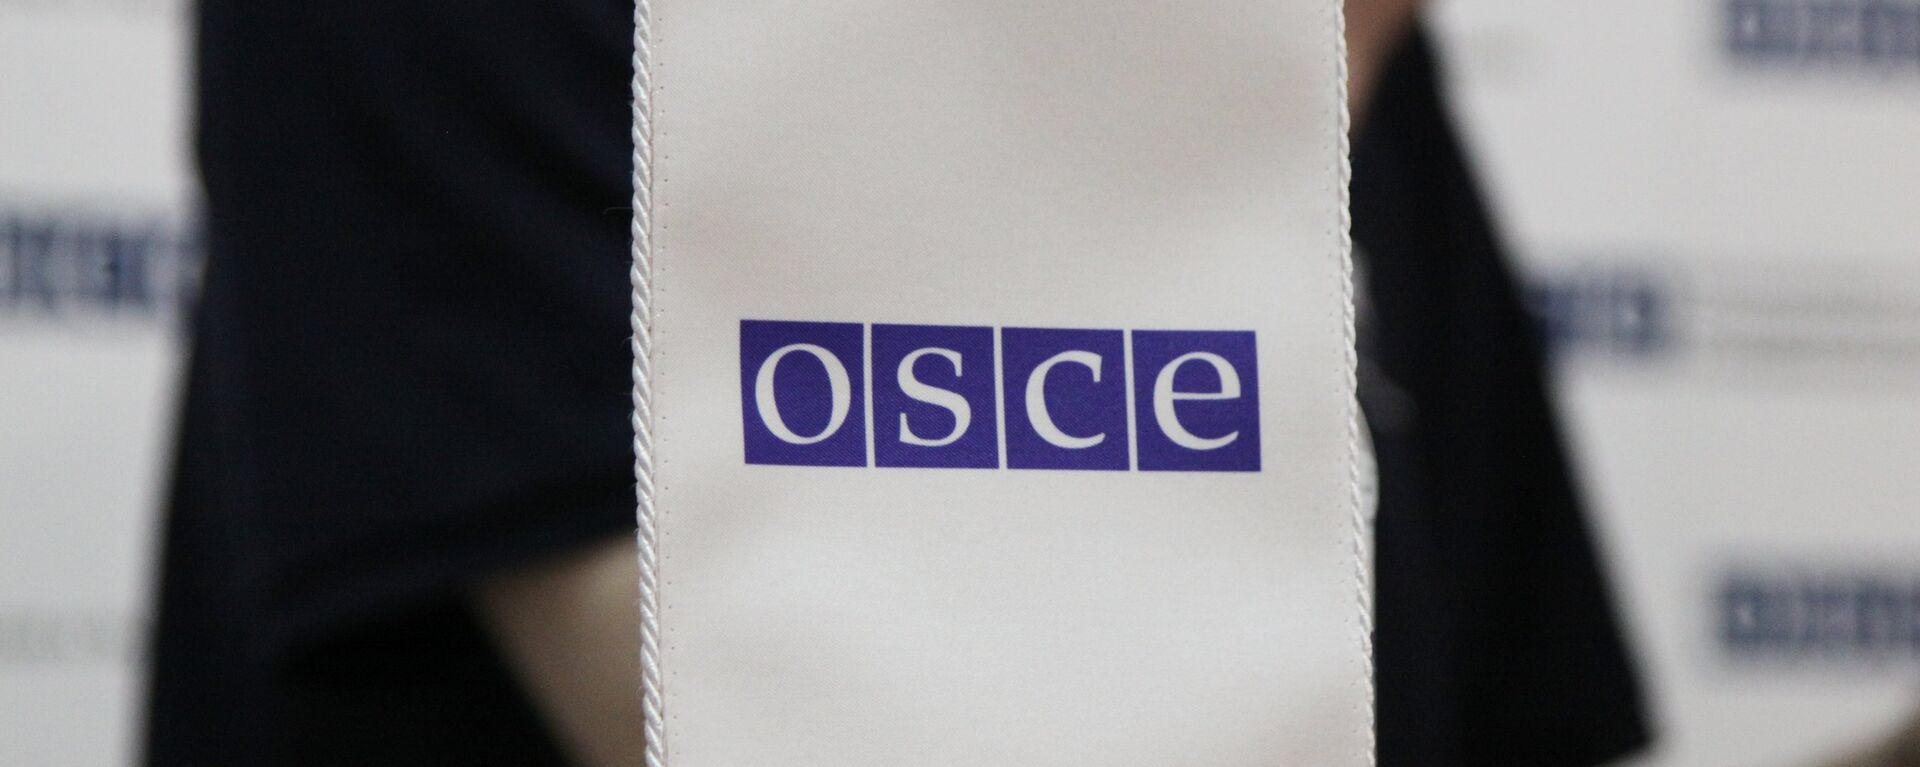 Logo de la OSCE - Sputnik Mundo, 1920, 15.11.2021